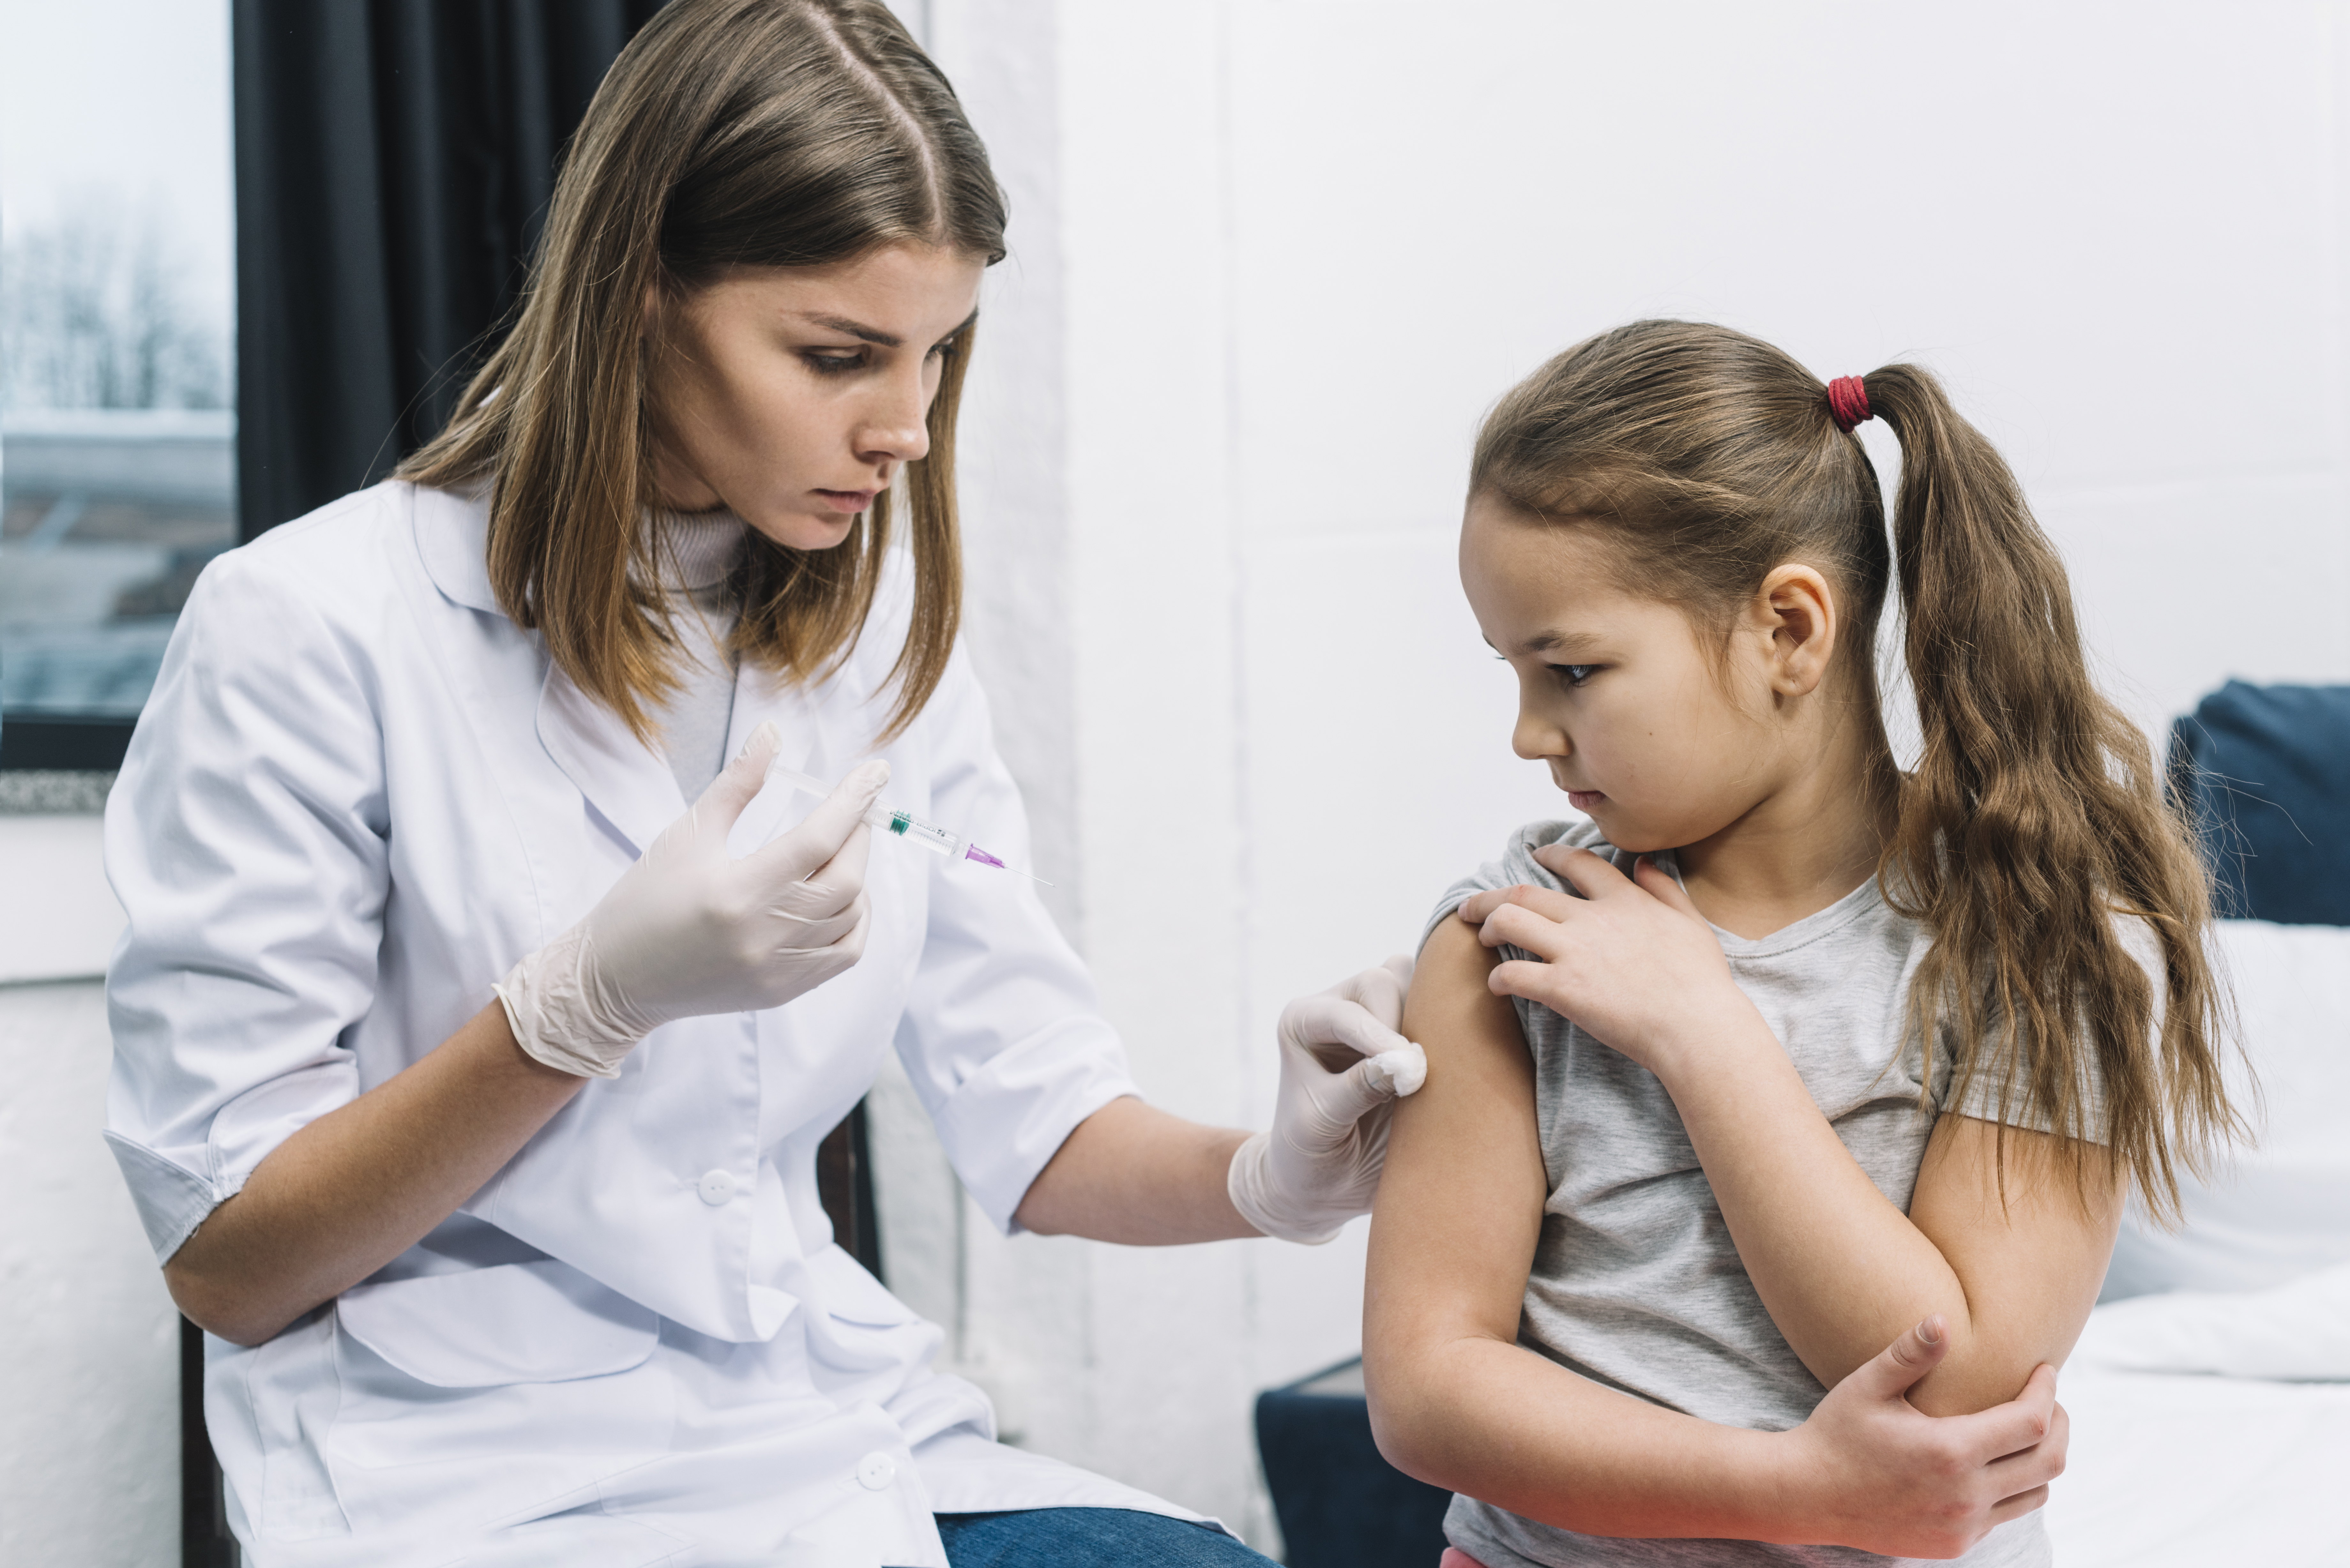 Инфекционист Дмитриев: Для детей грипп особо опасен из-за незрелости иммунитета